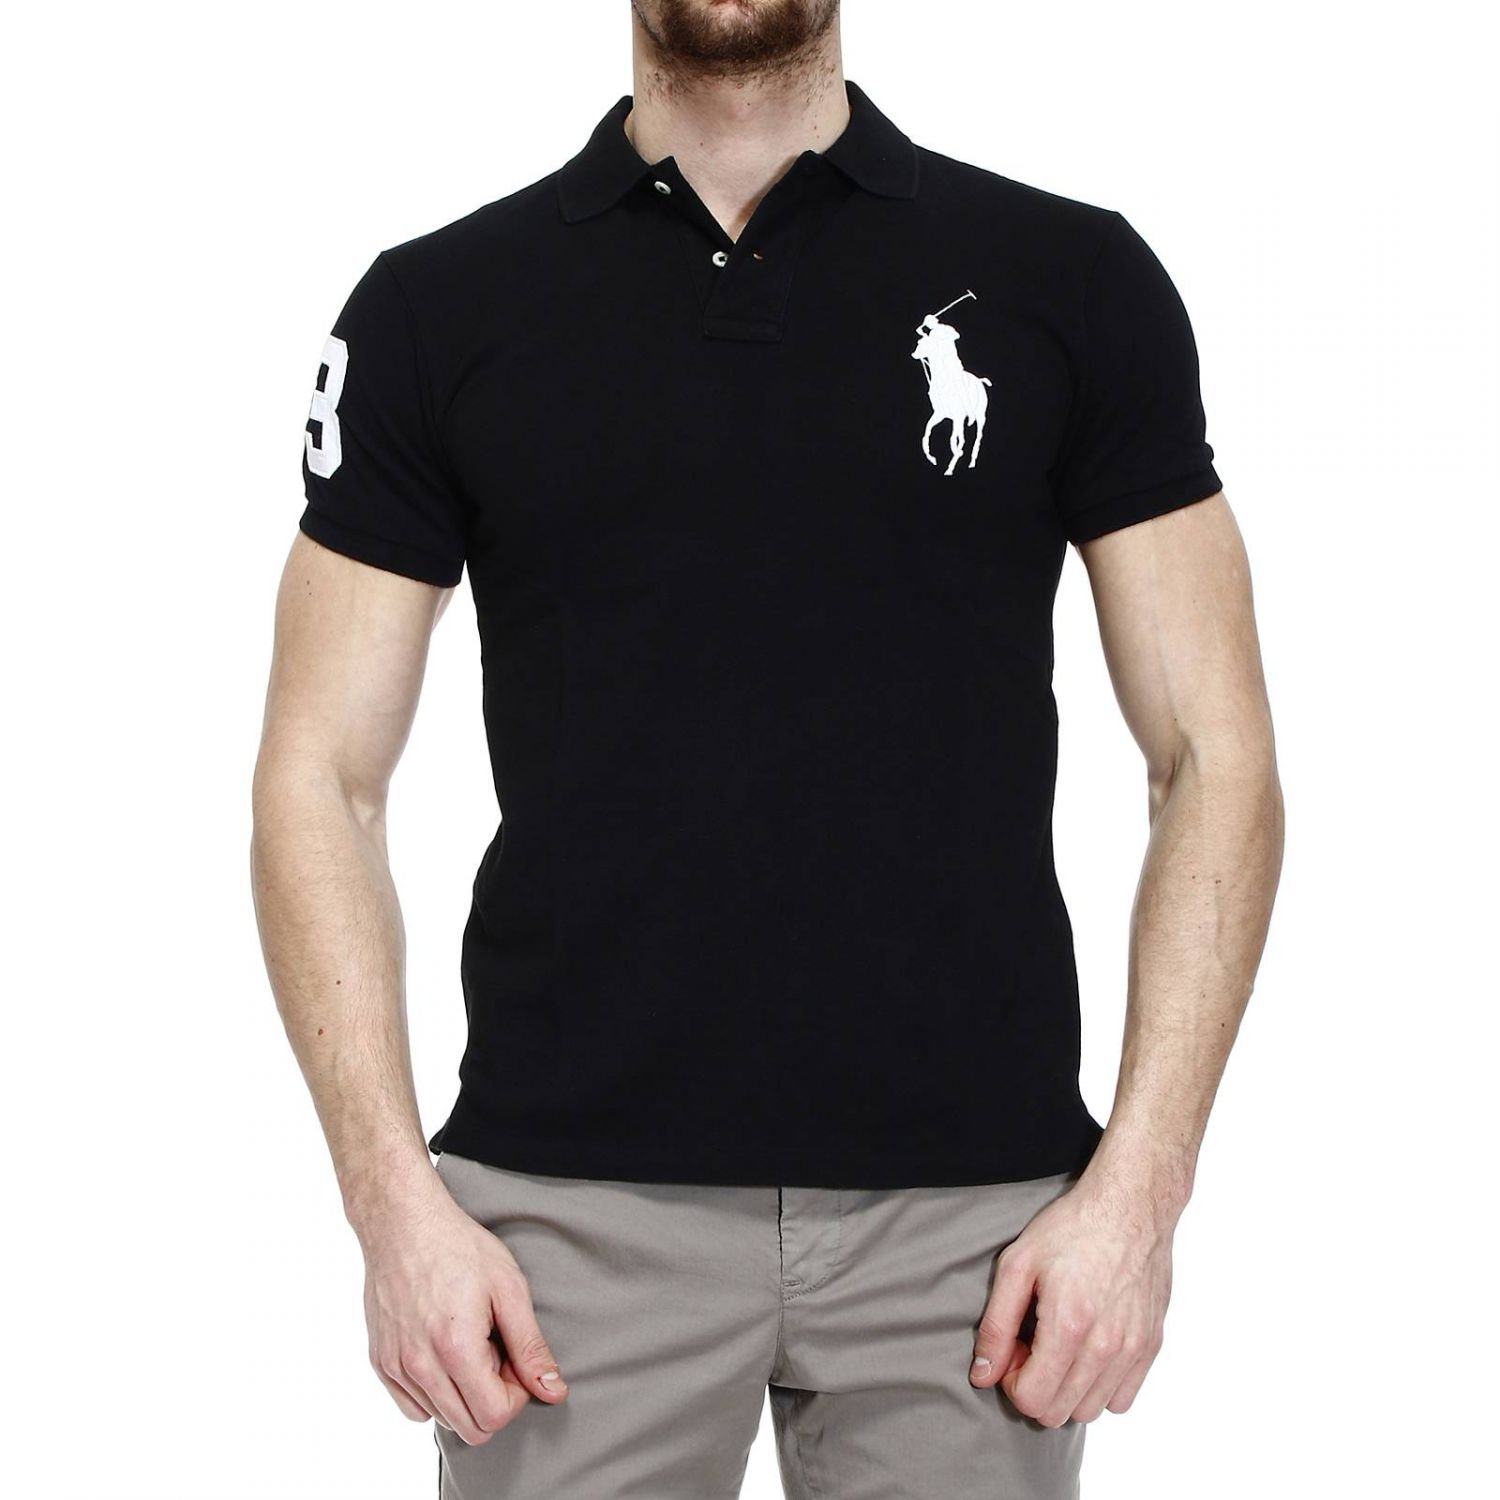 Ralph Lauren Polo Ralph Lauren Black T Shirt Polo Half Sleeve Big Pony Slim Fit Product 1 27931960 1 838481640 Normal 